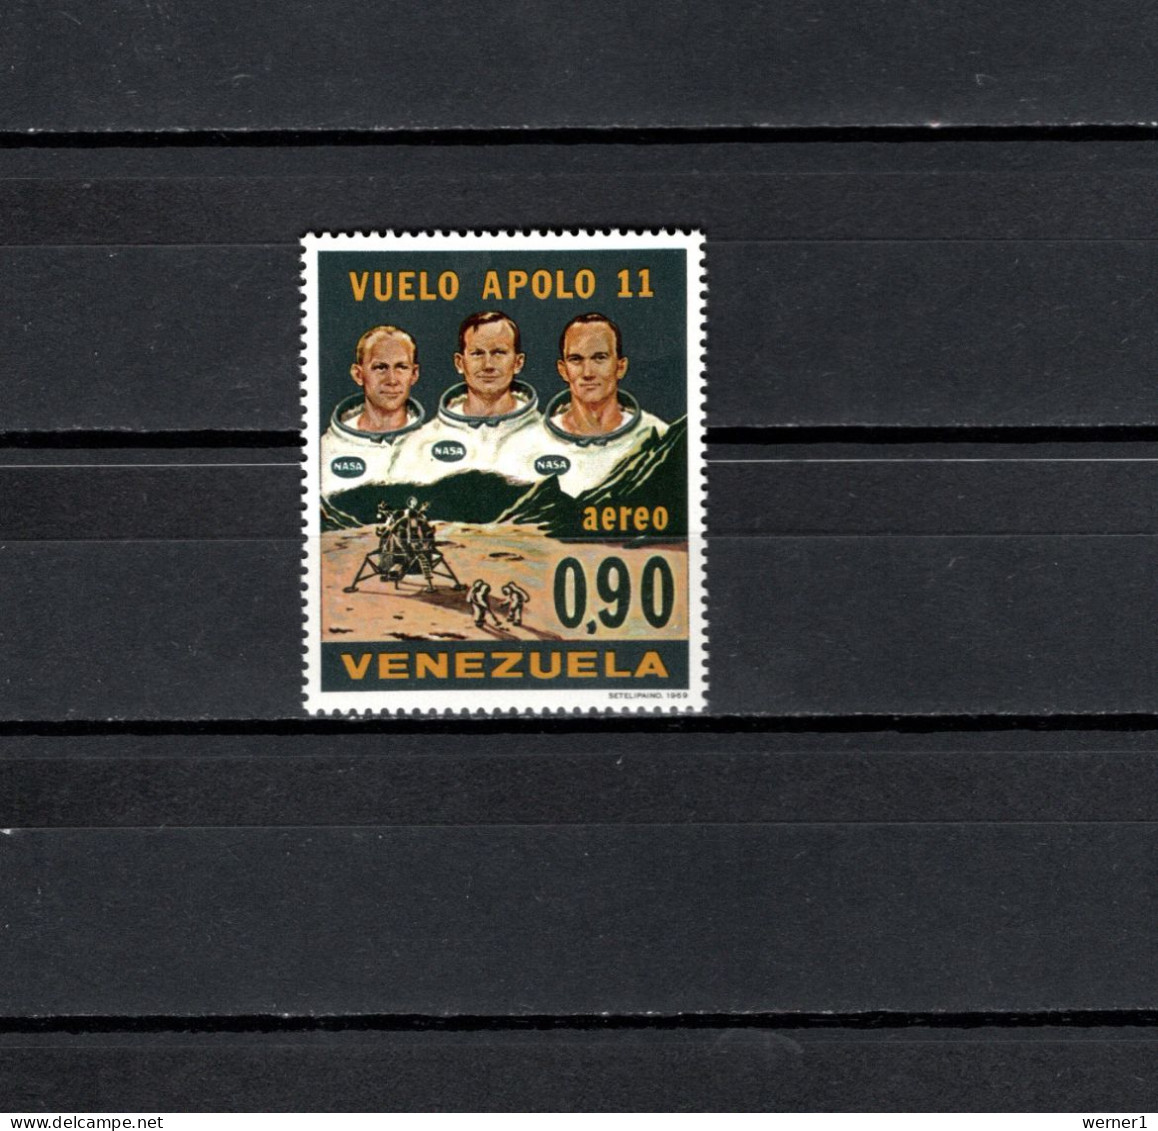 Venezuela 1969 Space, Apollo 11 Moonlanding Stamp MNH - South America